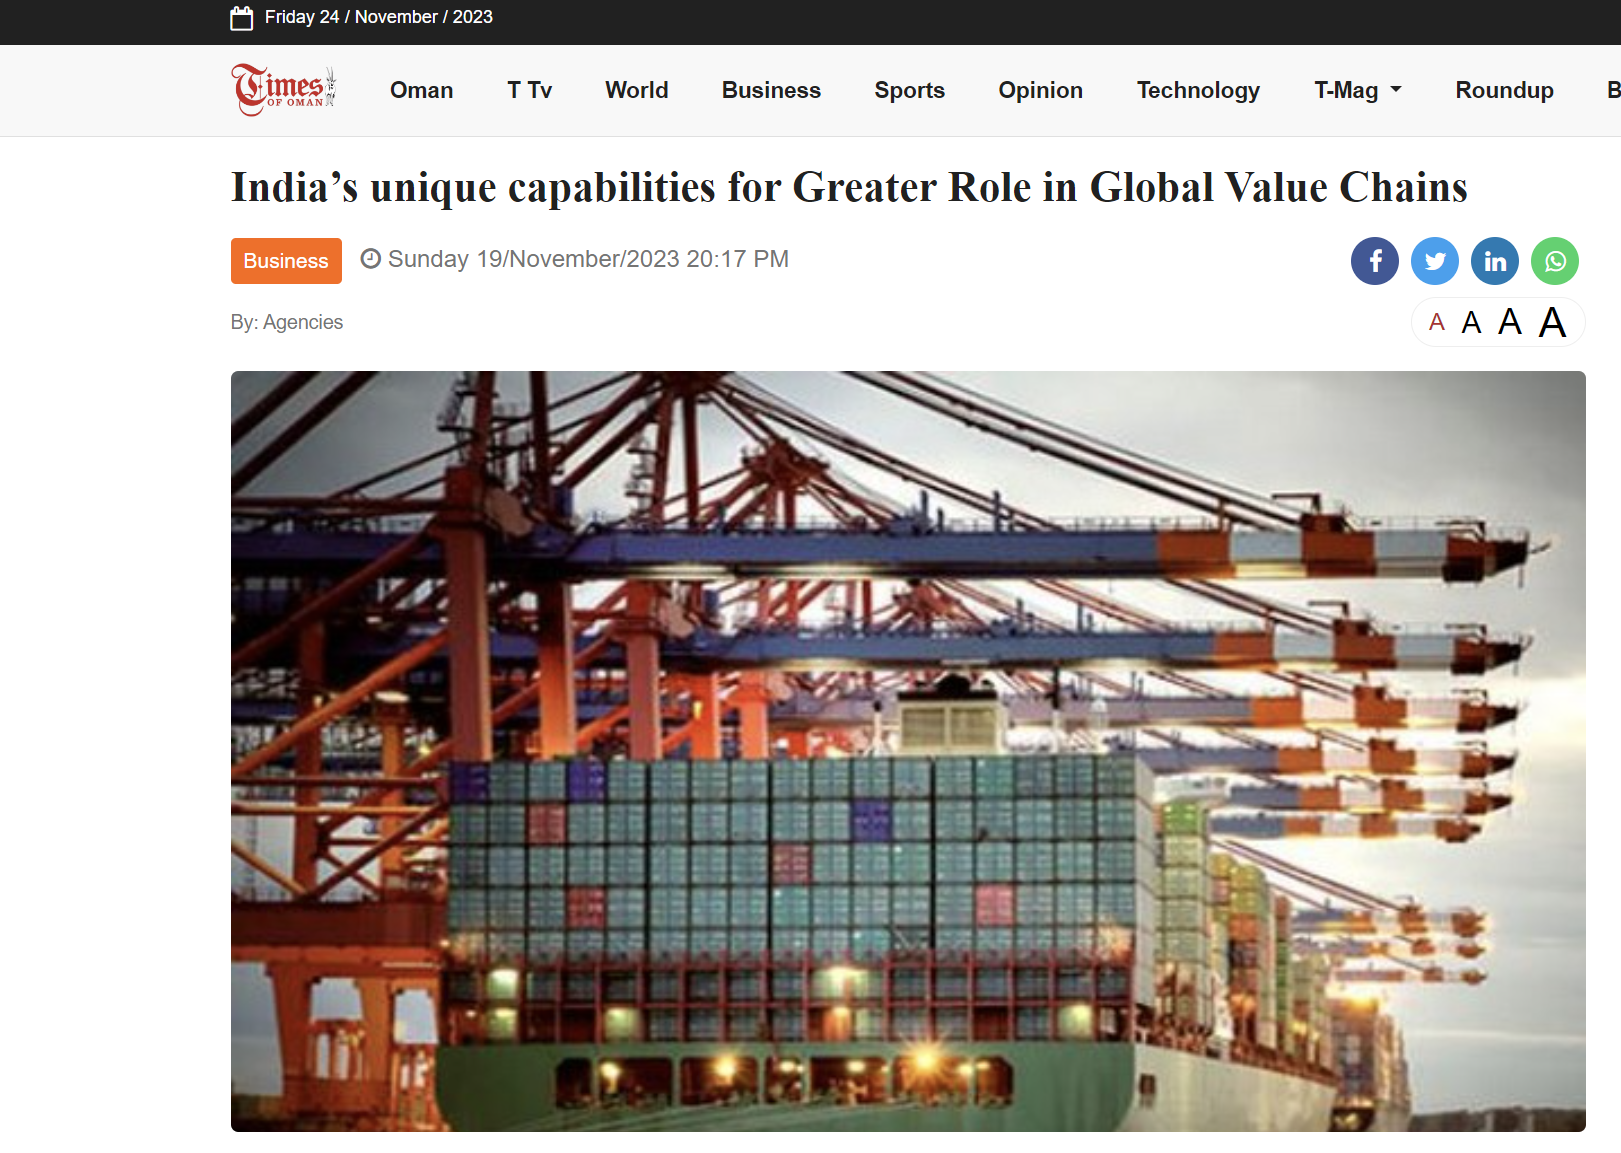 Times of Oman: Οι μοναδικές δυνατότητες της Ινδίας στις παγκόσμιες αλυσίδες αξίας